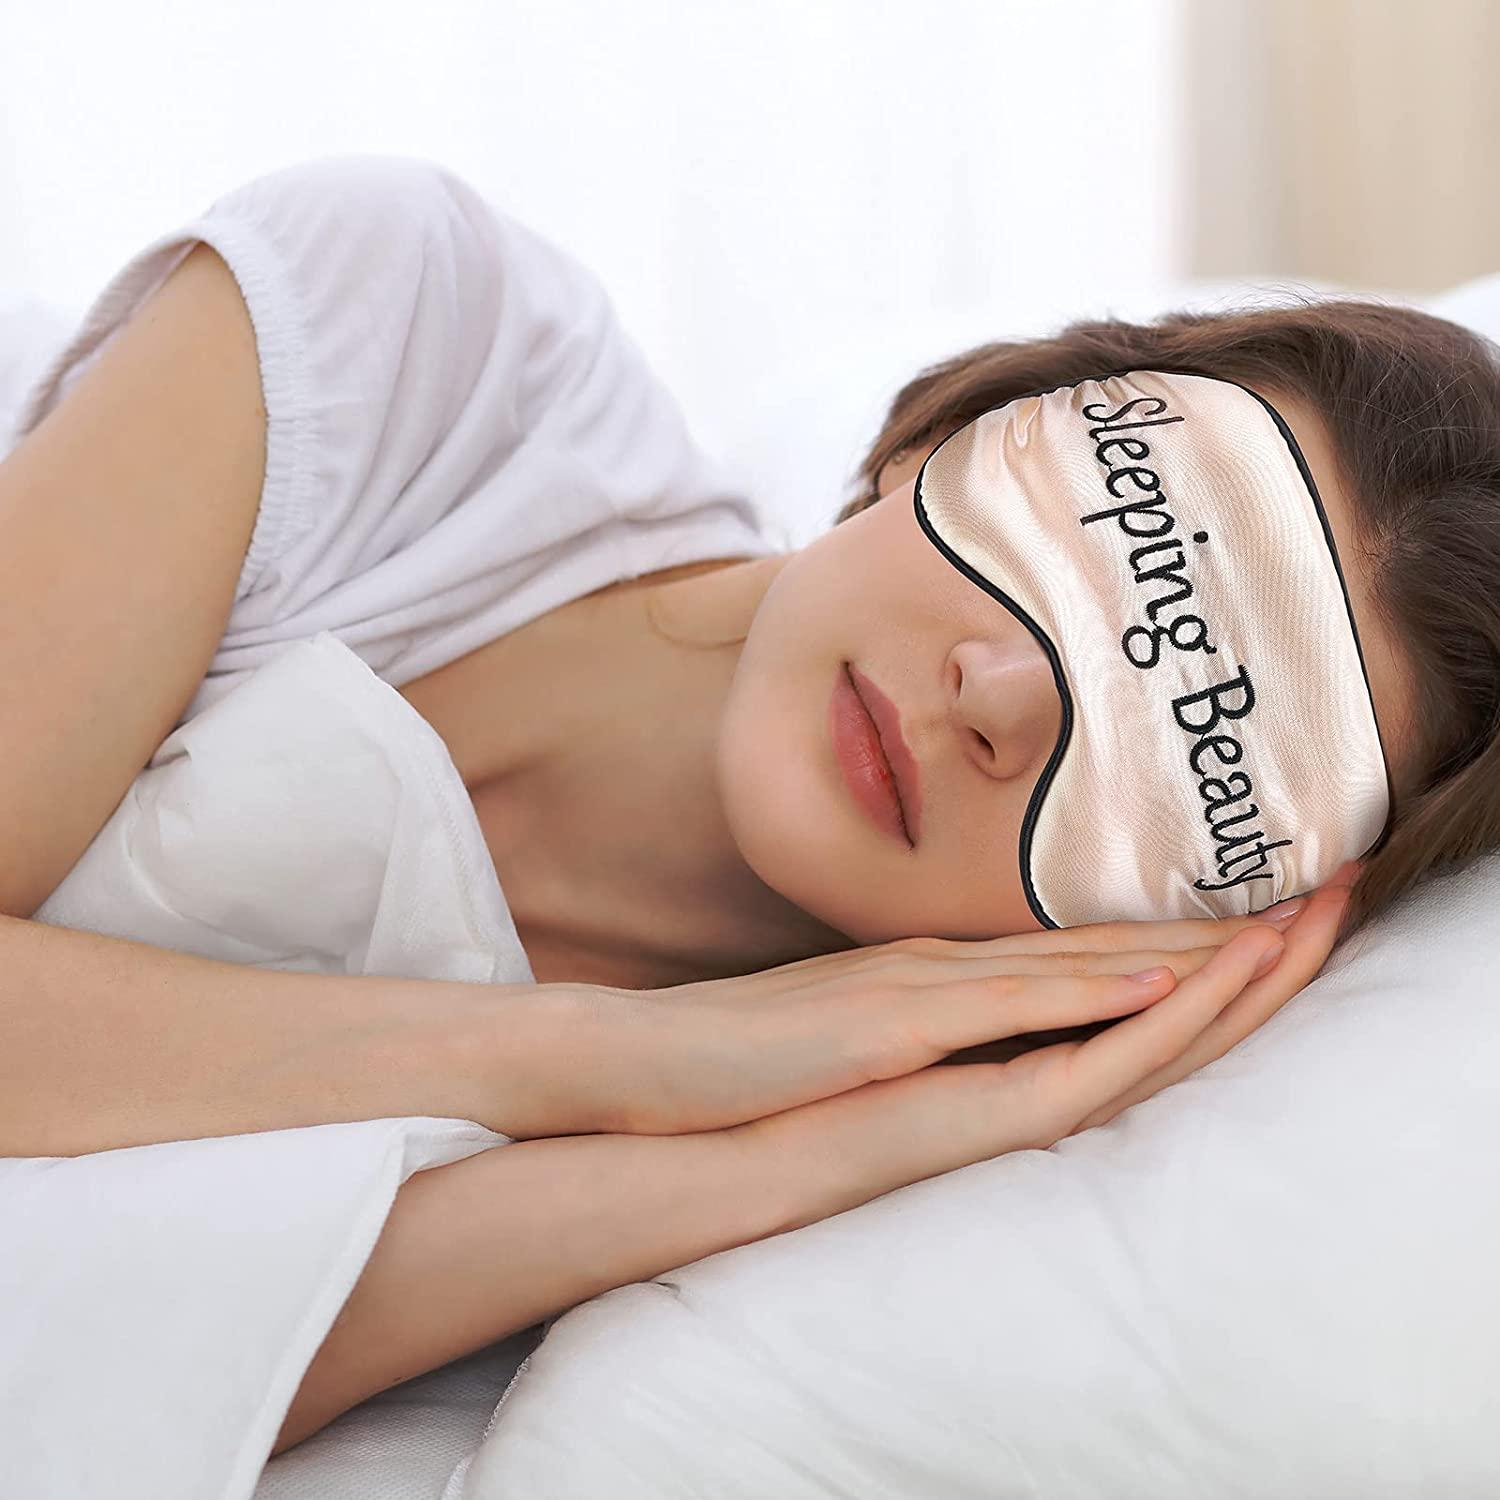 4 Pieces Funny Sleep Mask Silk Eye Mask Soft Blackout Blindfold with  Adjustable Strap Sleeping Eye Cover Mask for Women Men Travel, Nap,  Meditation (Black, Gray, Pink, Purple)